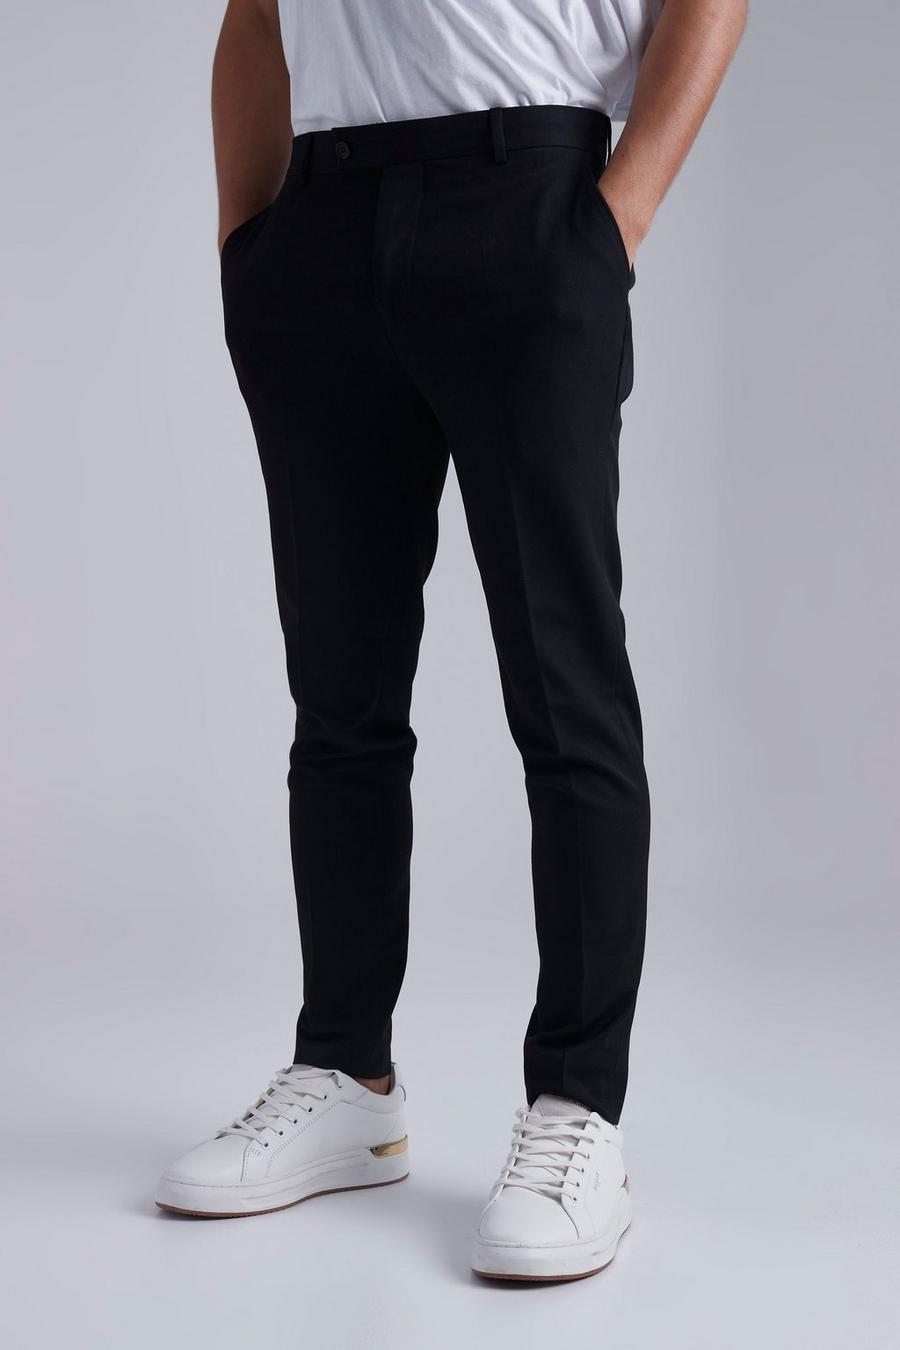 Pantaloni Stretch Super Skinny Fit extra comodi, Black negro